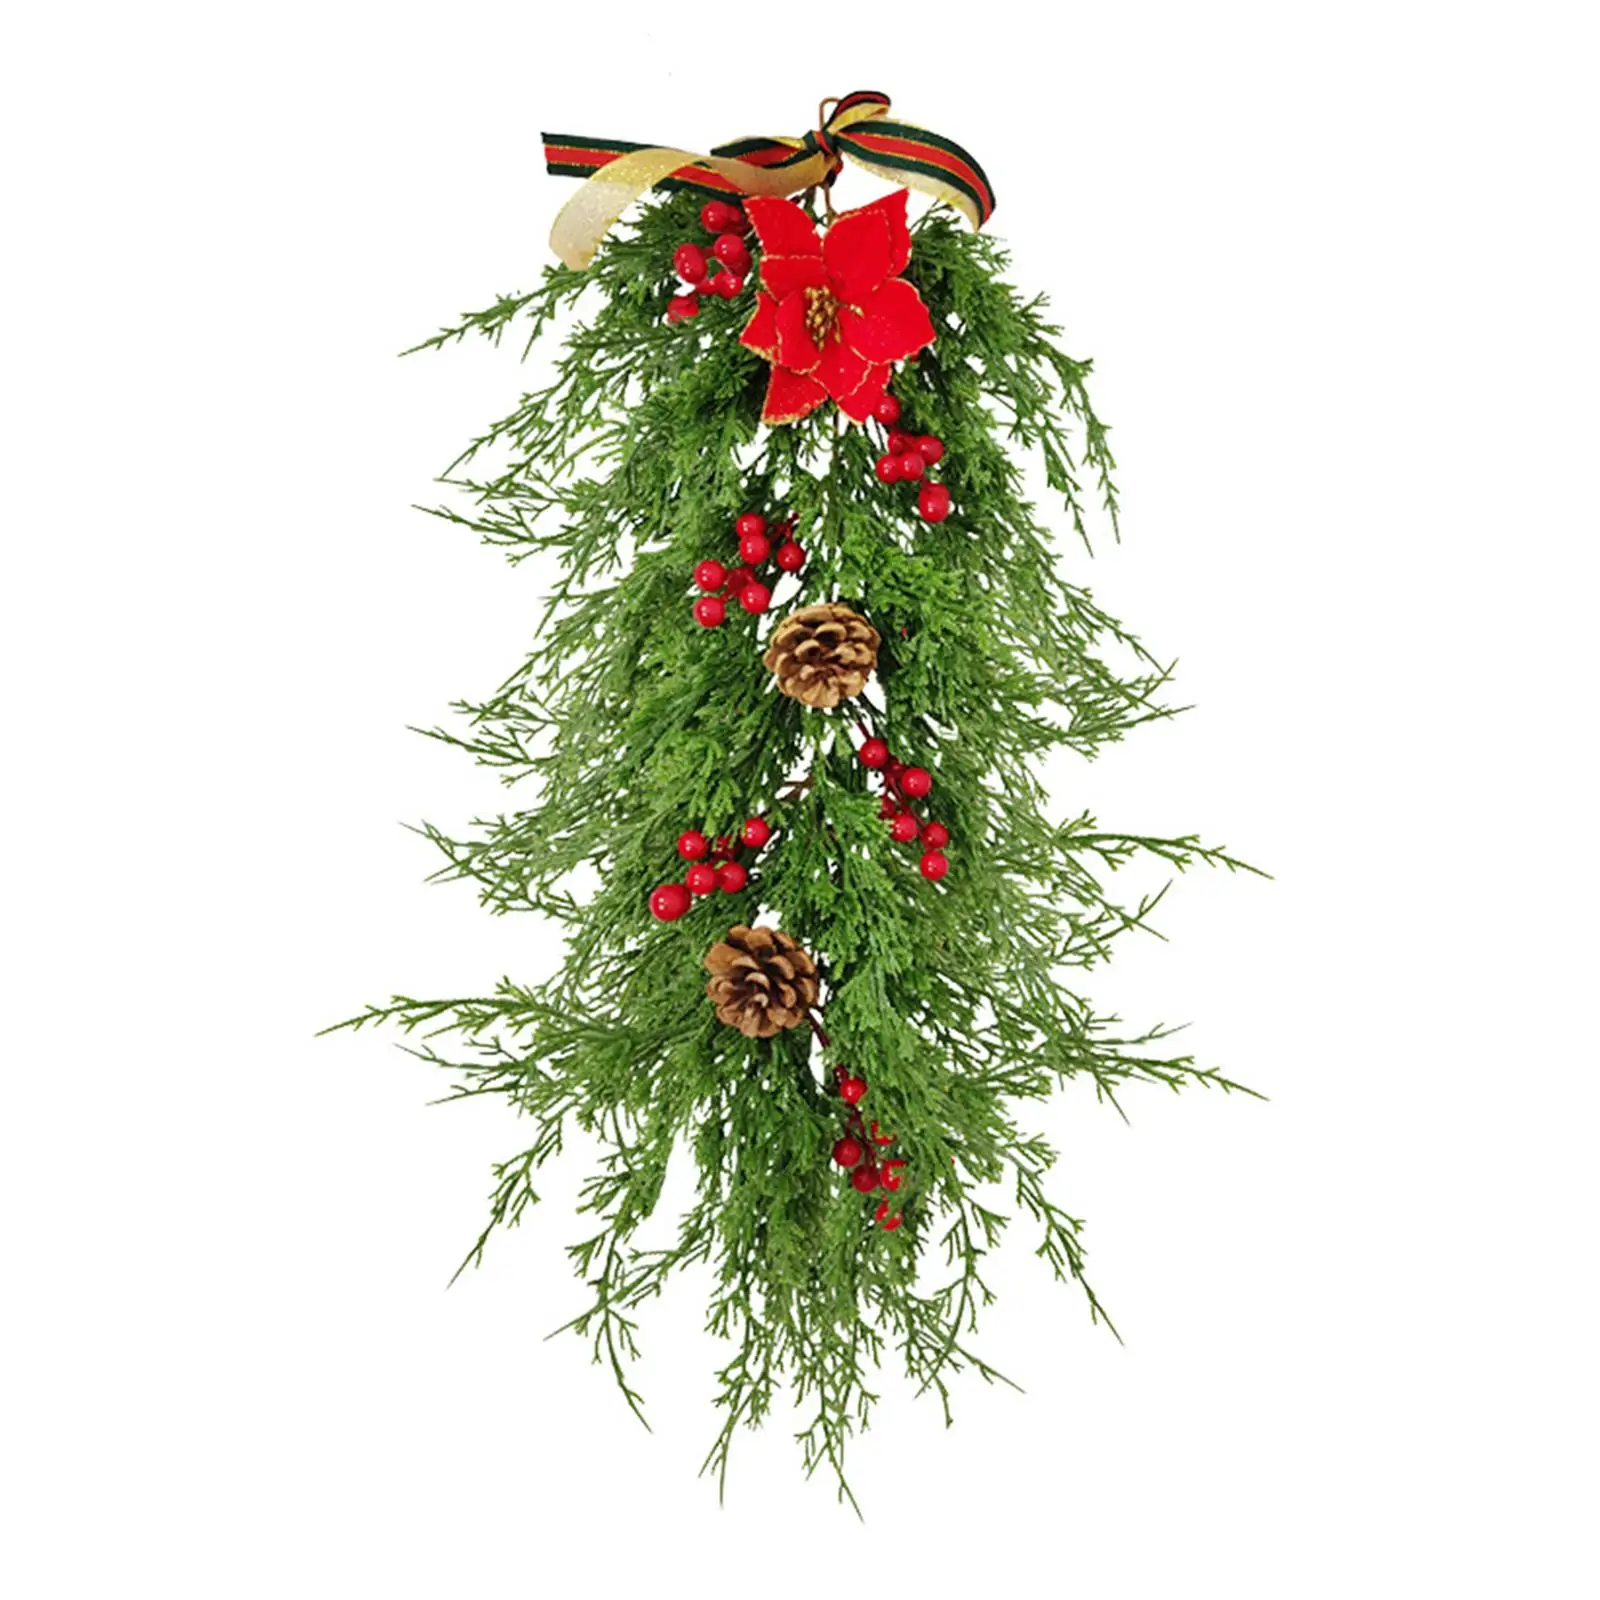 Decorative Christmas Teardrop Wreath Wall Hanging Garland Flower Wreath